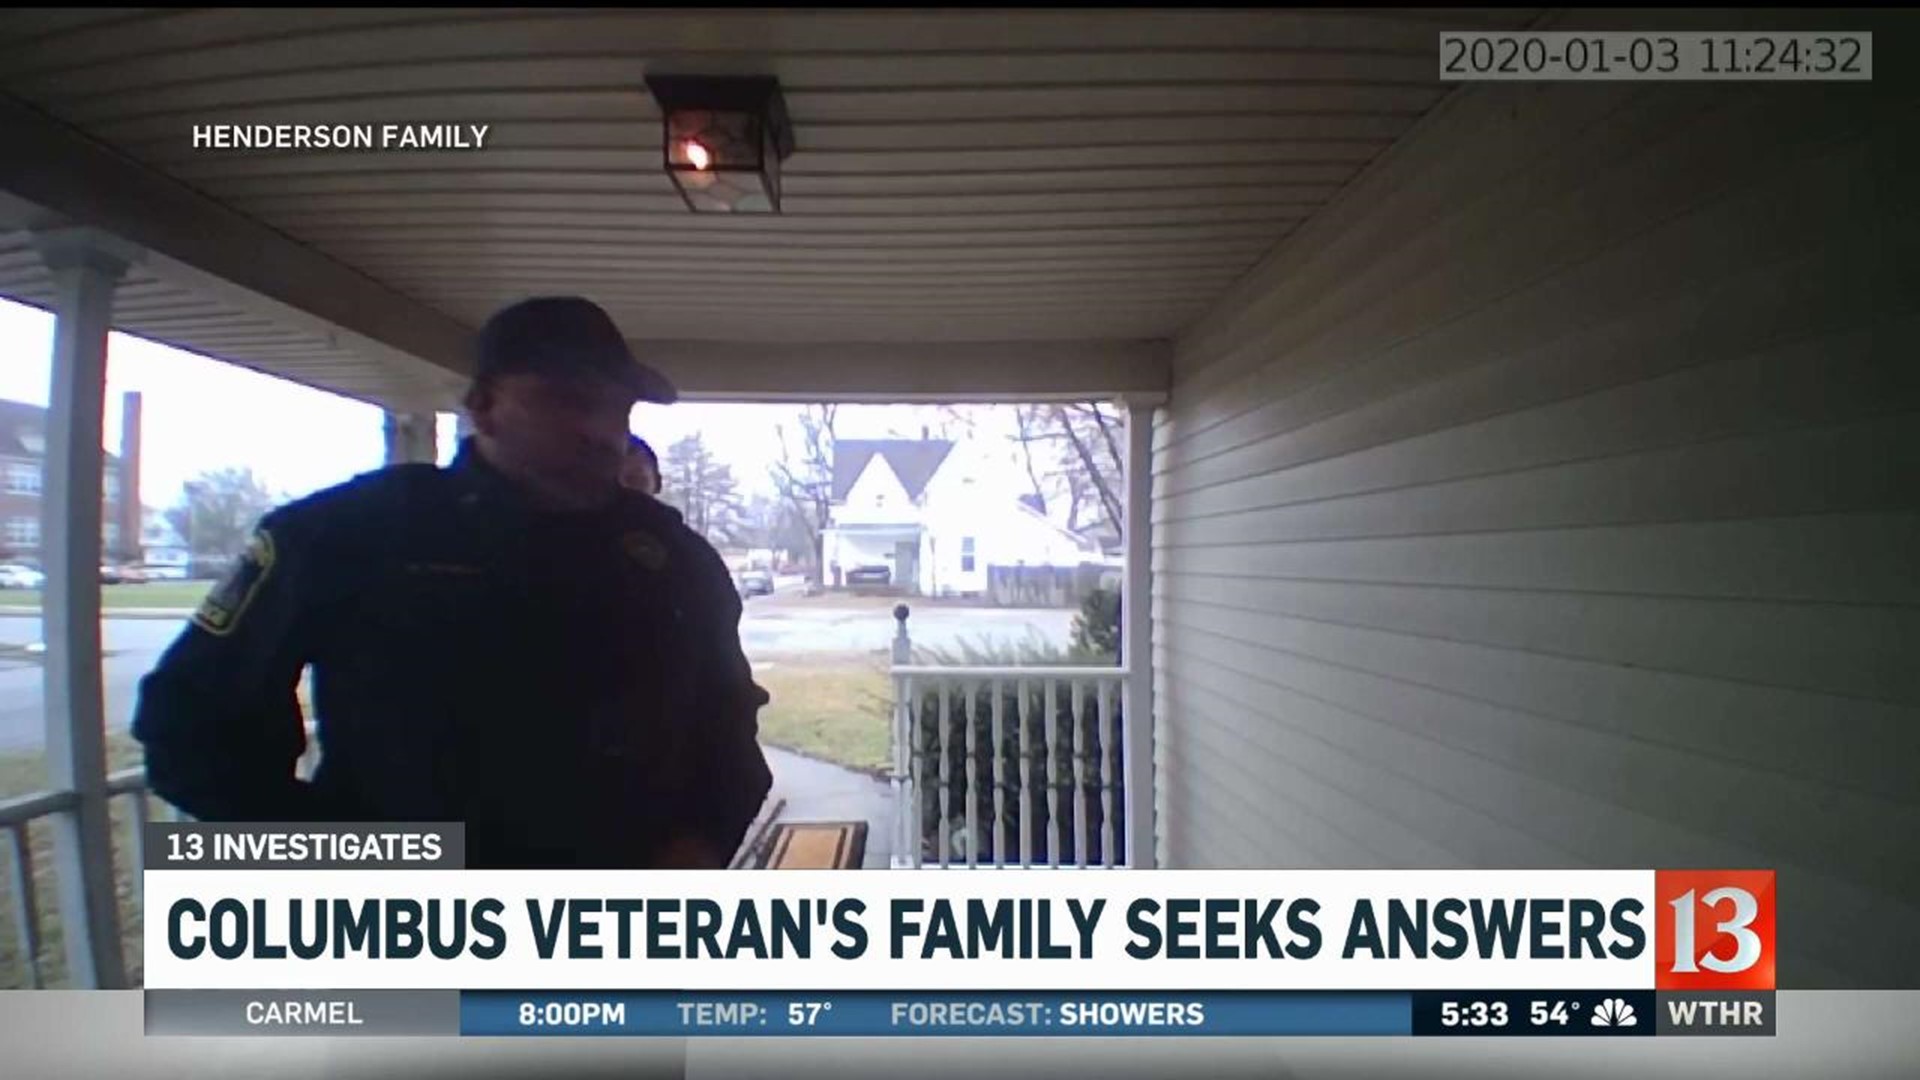 Columbus Veteran's Family seeks answers